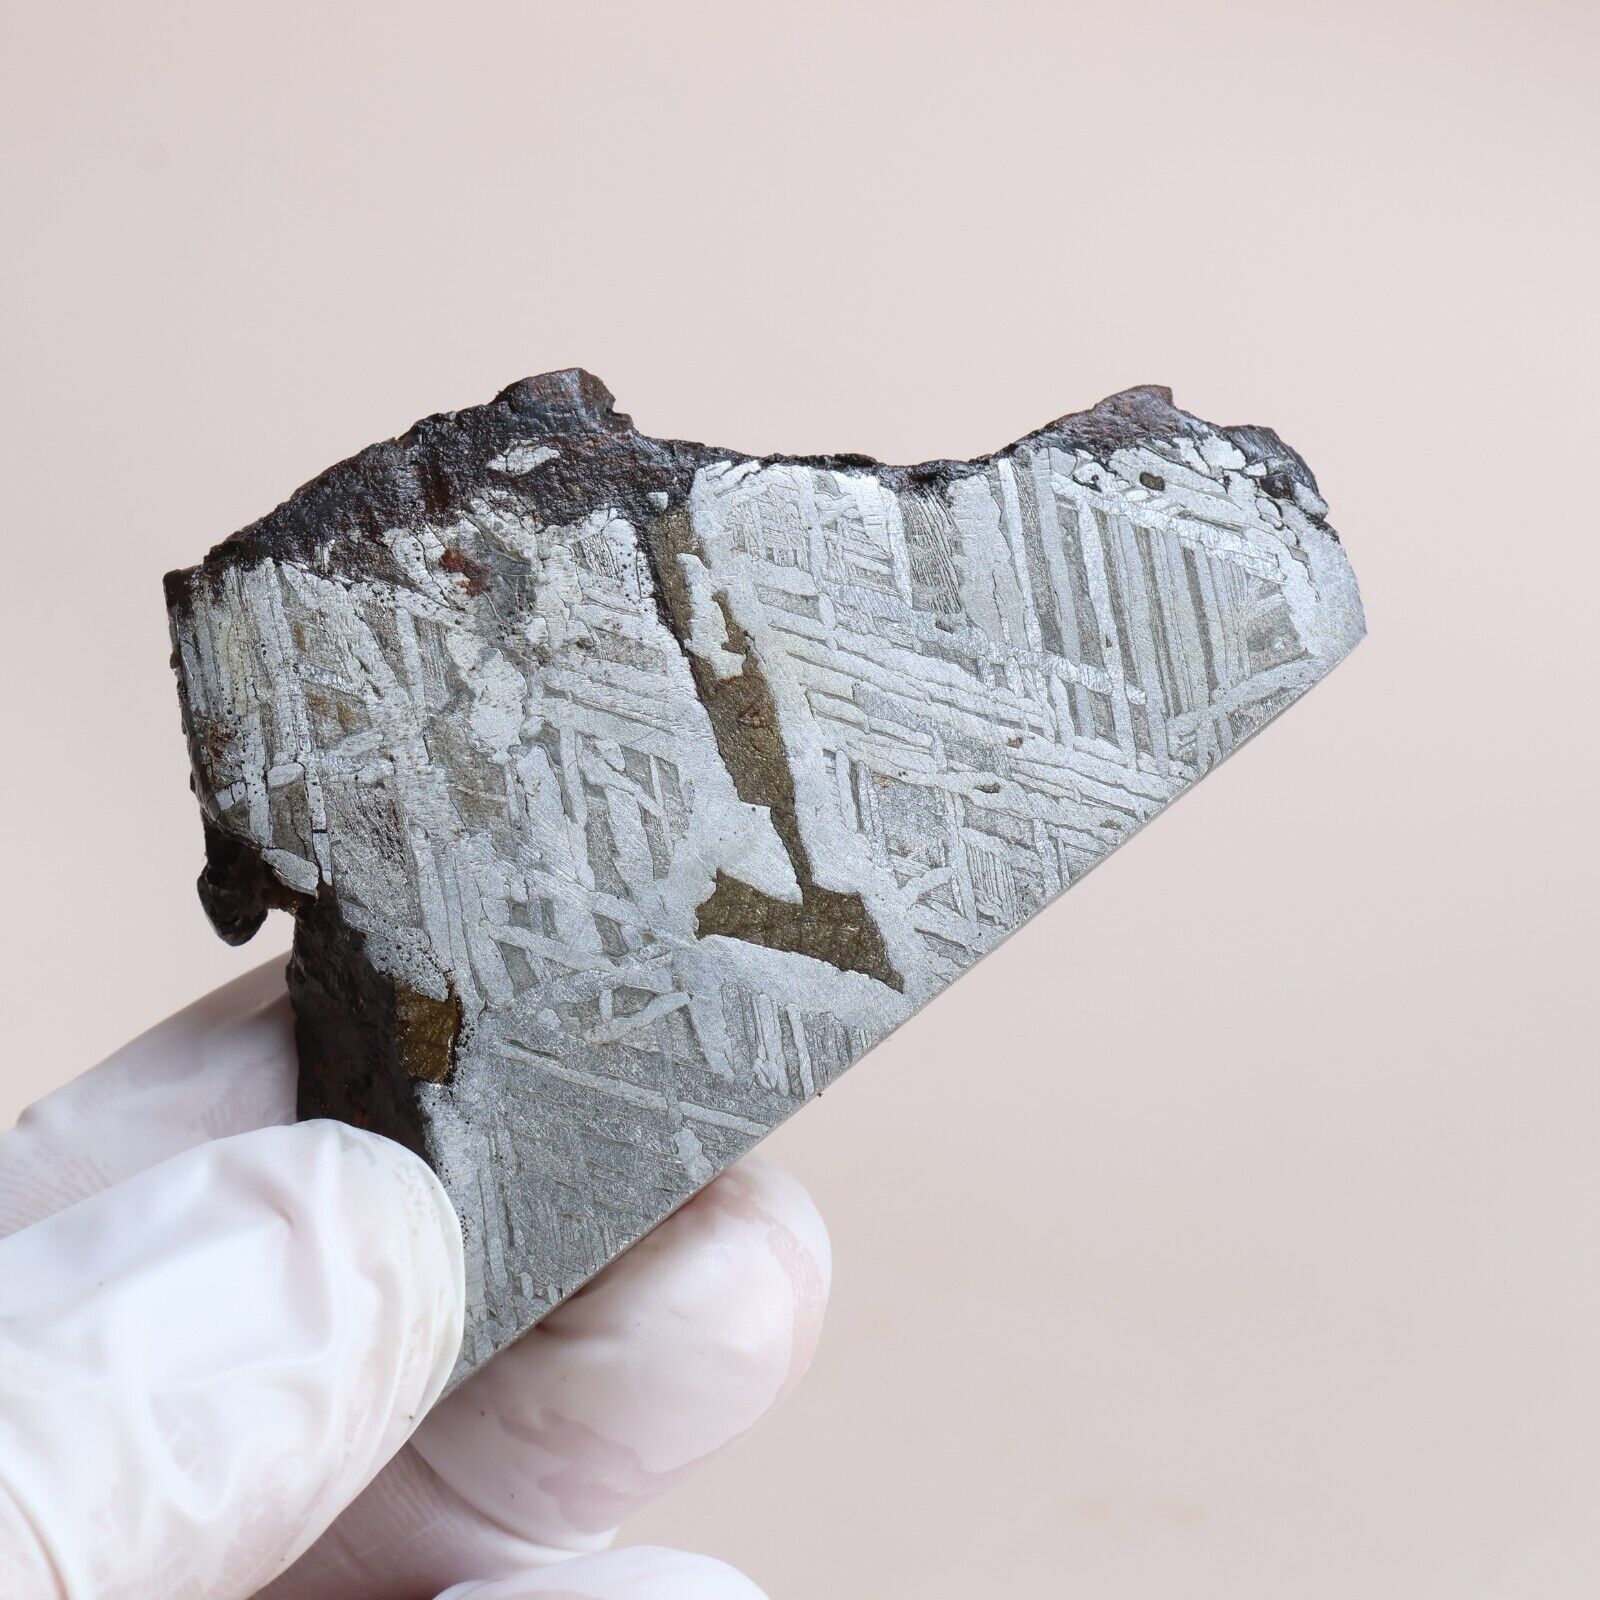 120g Muonionalusta meteorite,Natural meteorite slices,Collectibles,gift L117